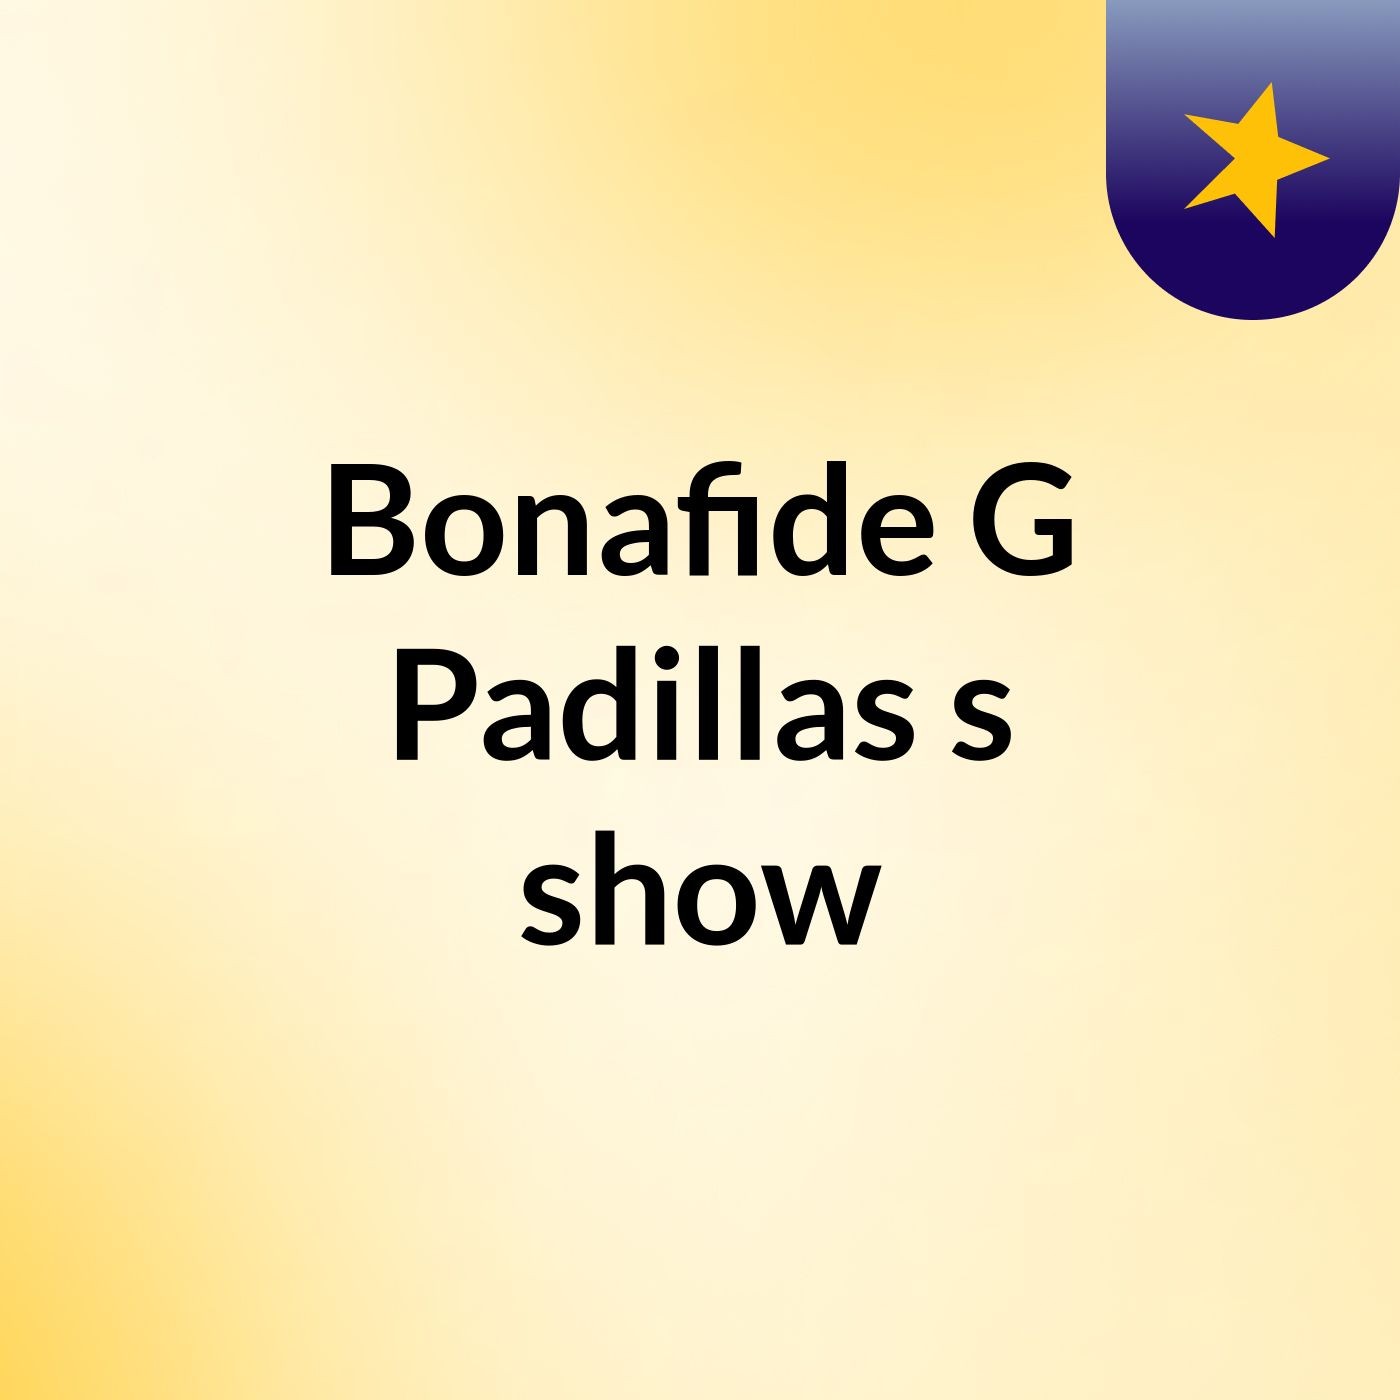 Bonafide G Padillas's show